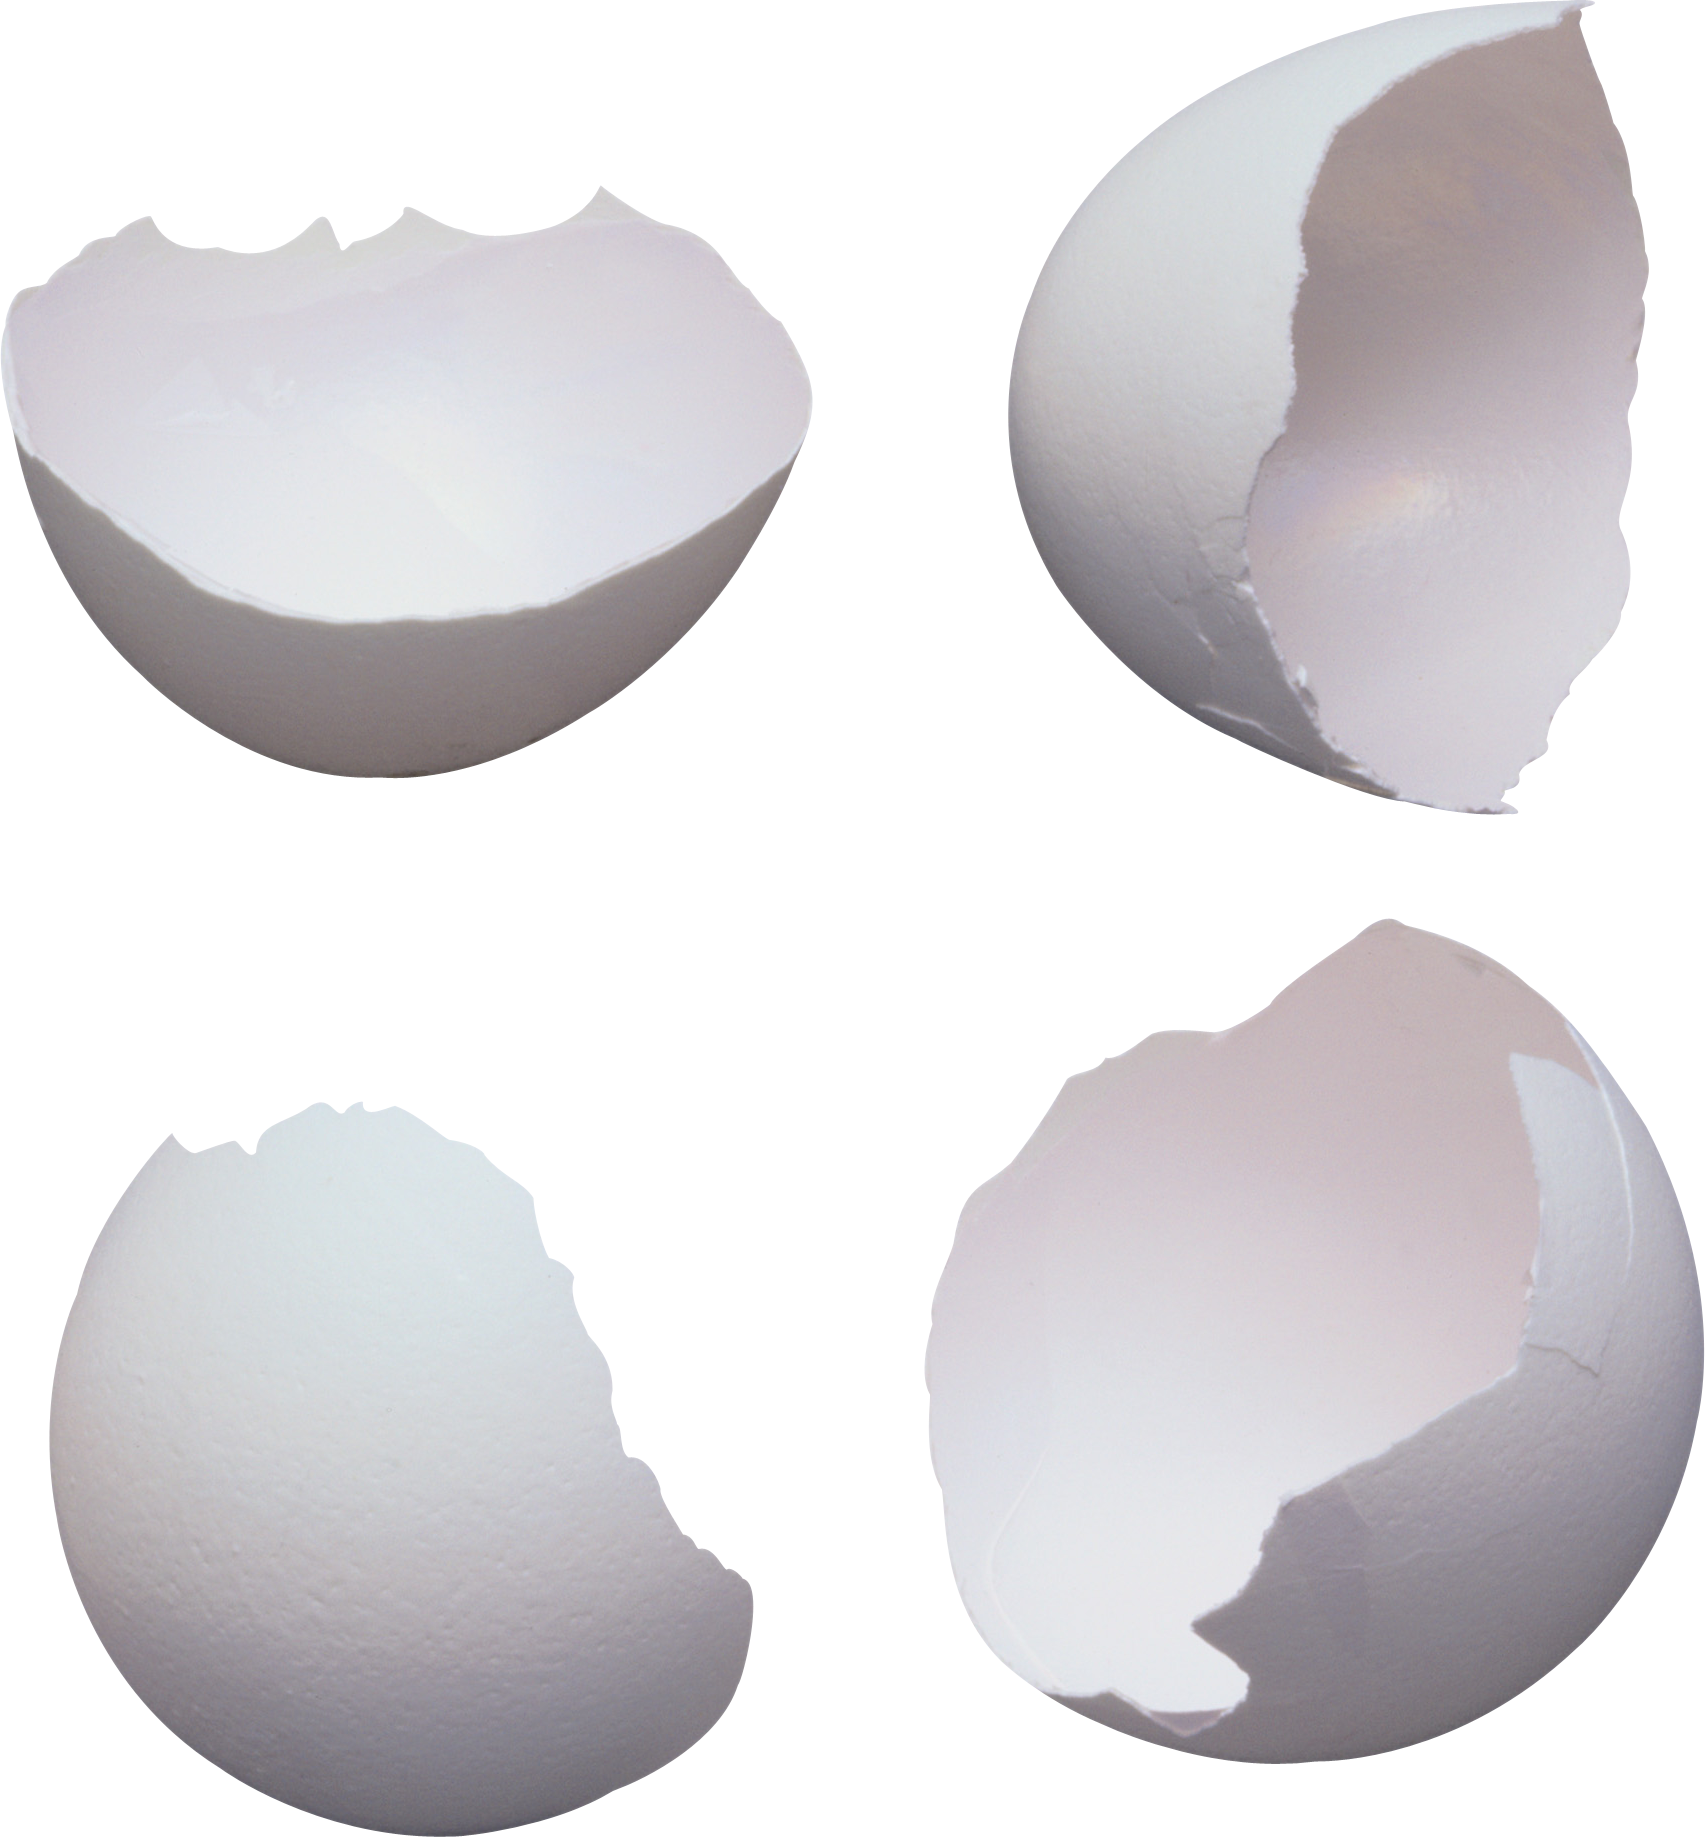 Yumurta kabuğu